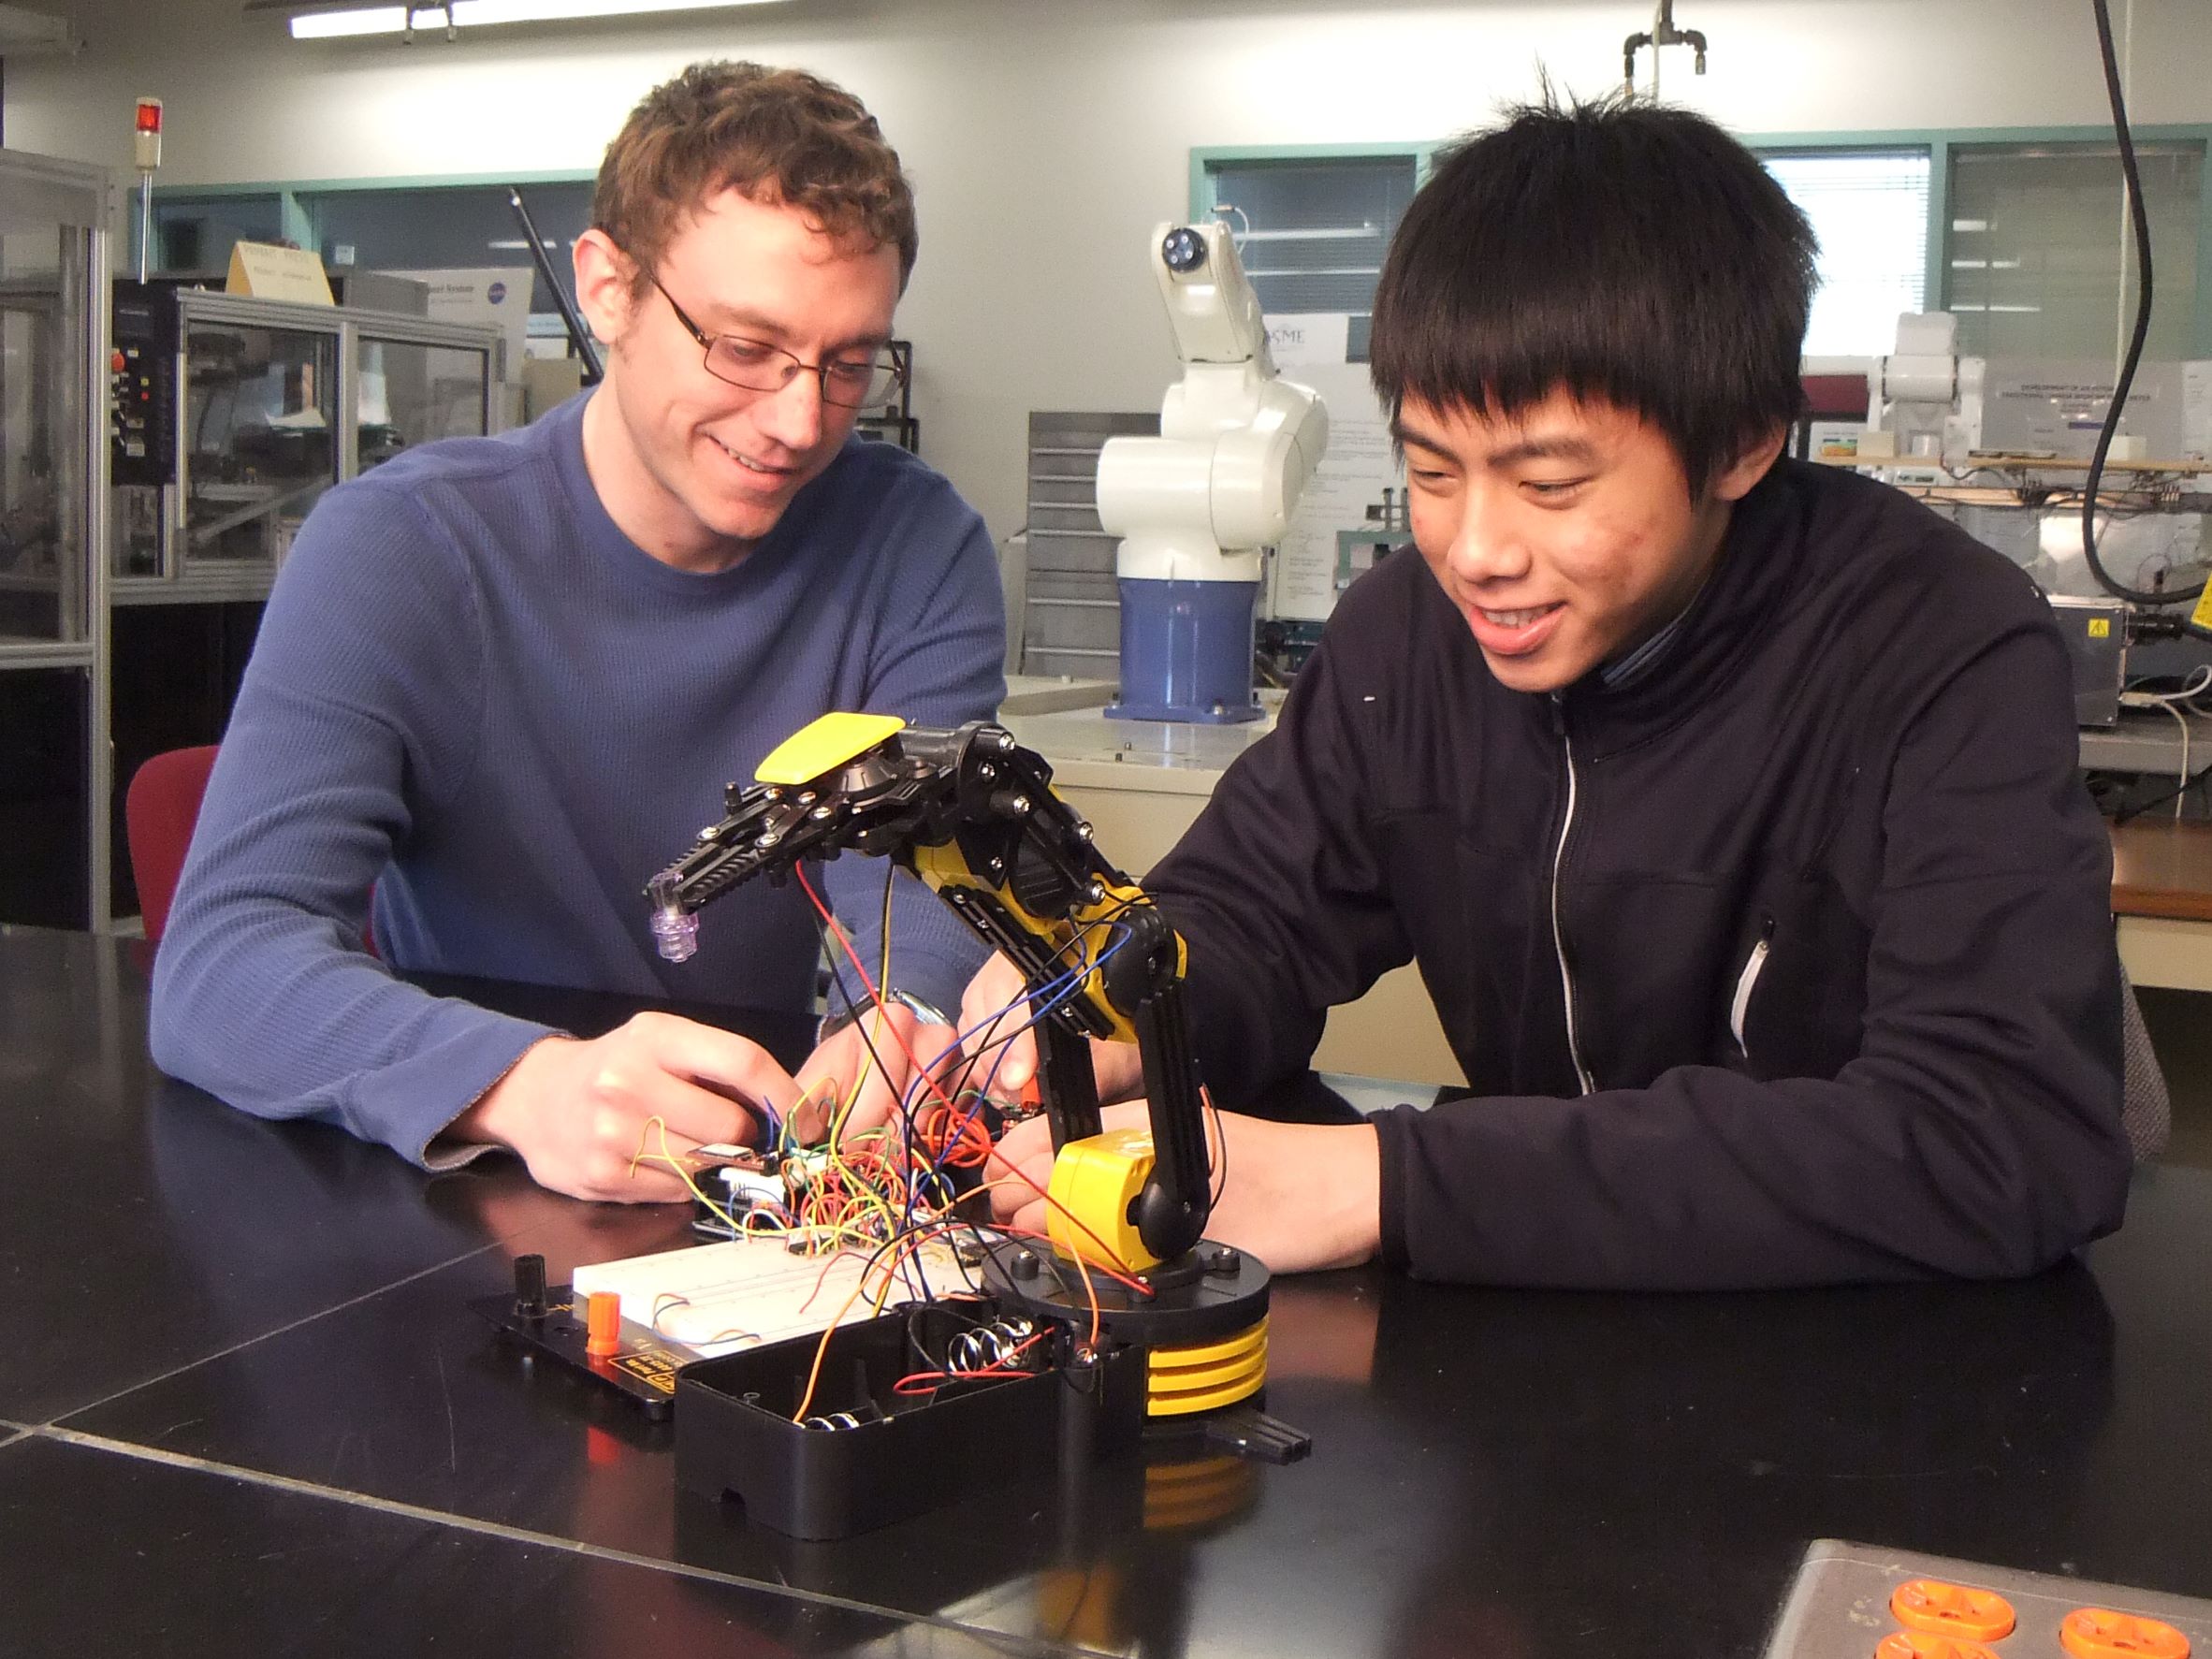 Two men observe a robotic device